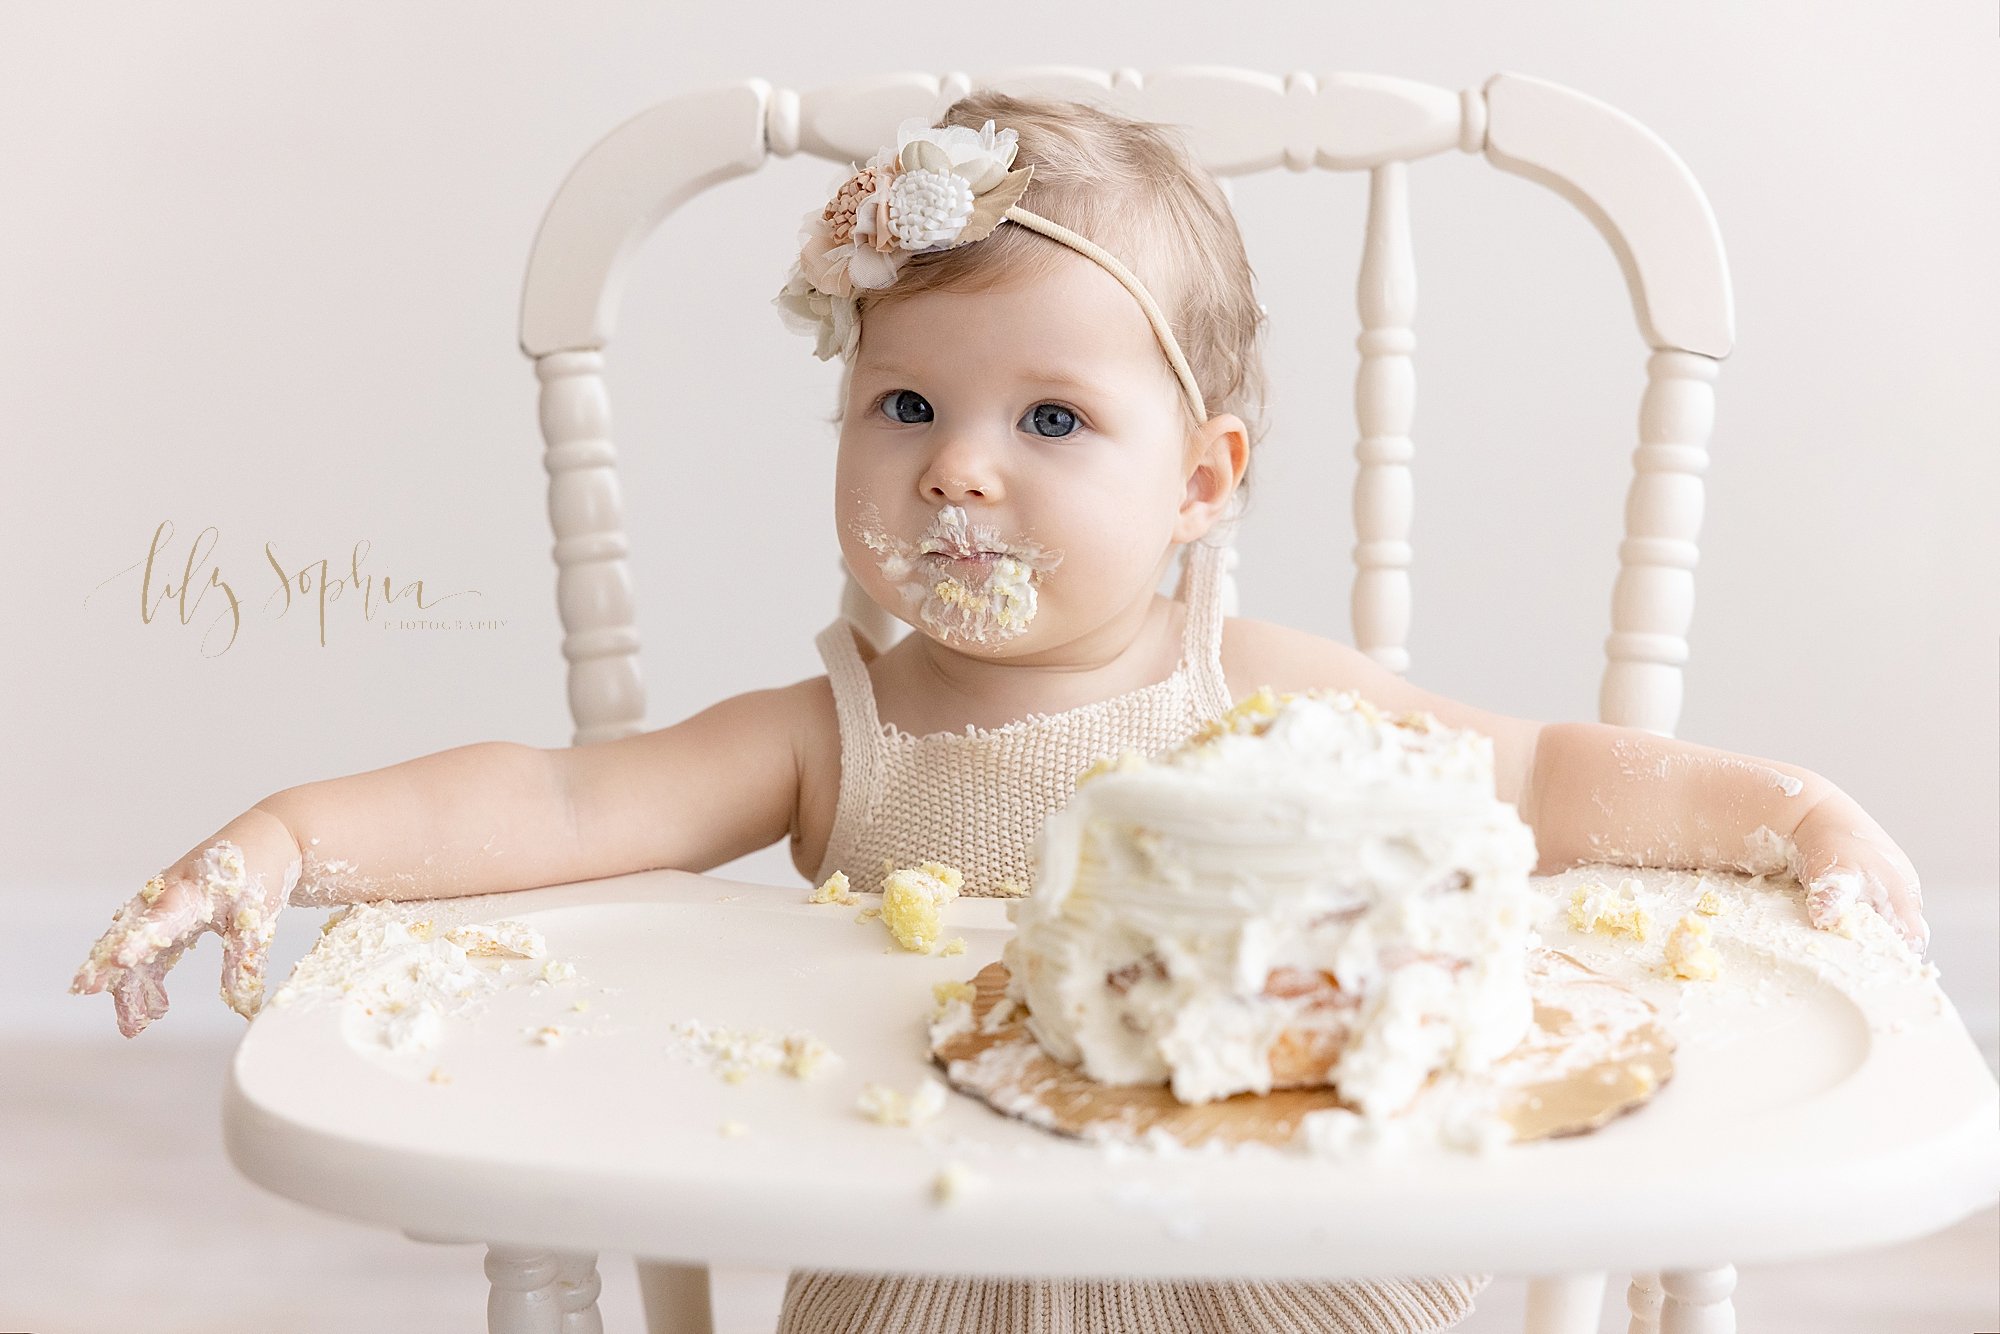 intown-atlanta-decatur-brookhaven-buckhead-first-birthday-cake-smash-family-photoshoot-baby-girl_5406.jpg